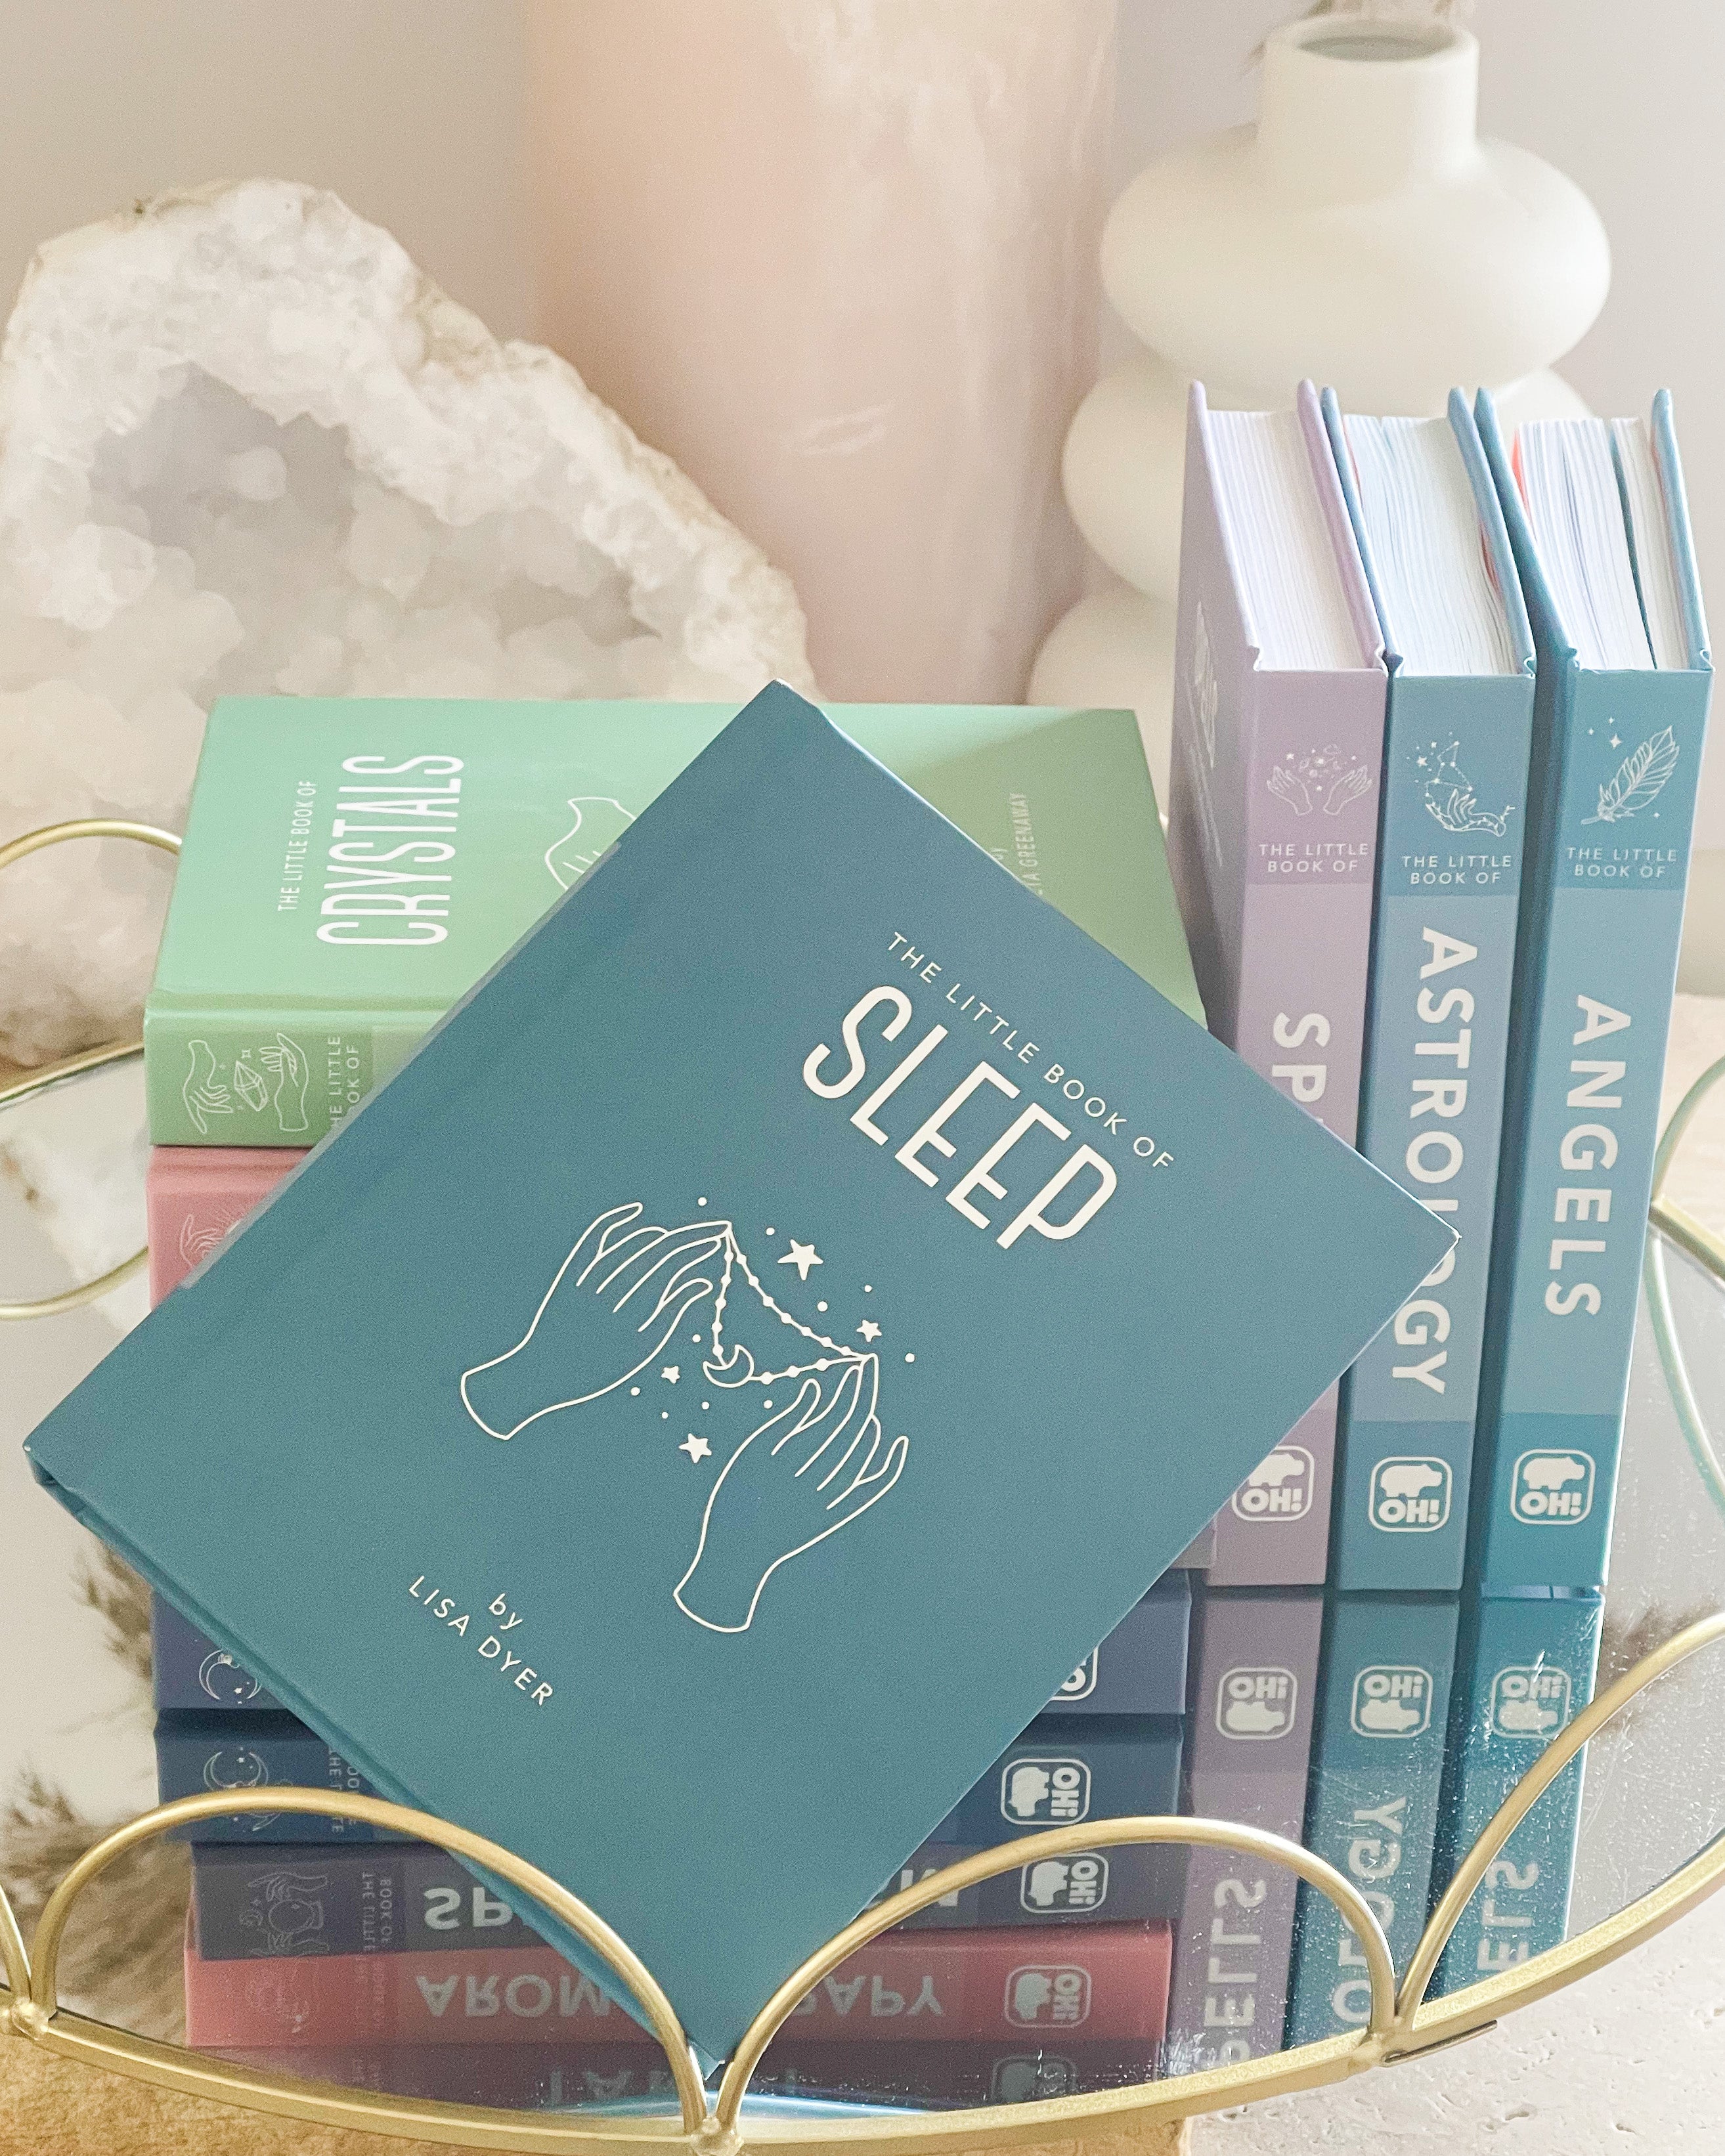 The Little Book of Sleep // Nourishment + Self-Care + Sweet Dreams